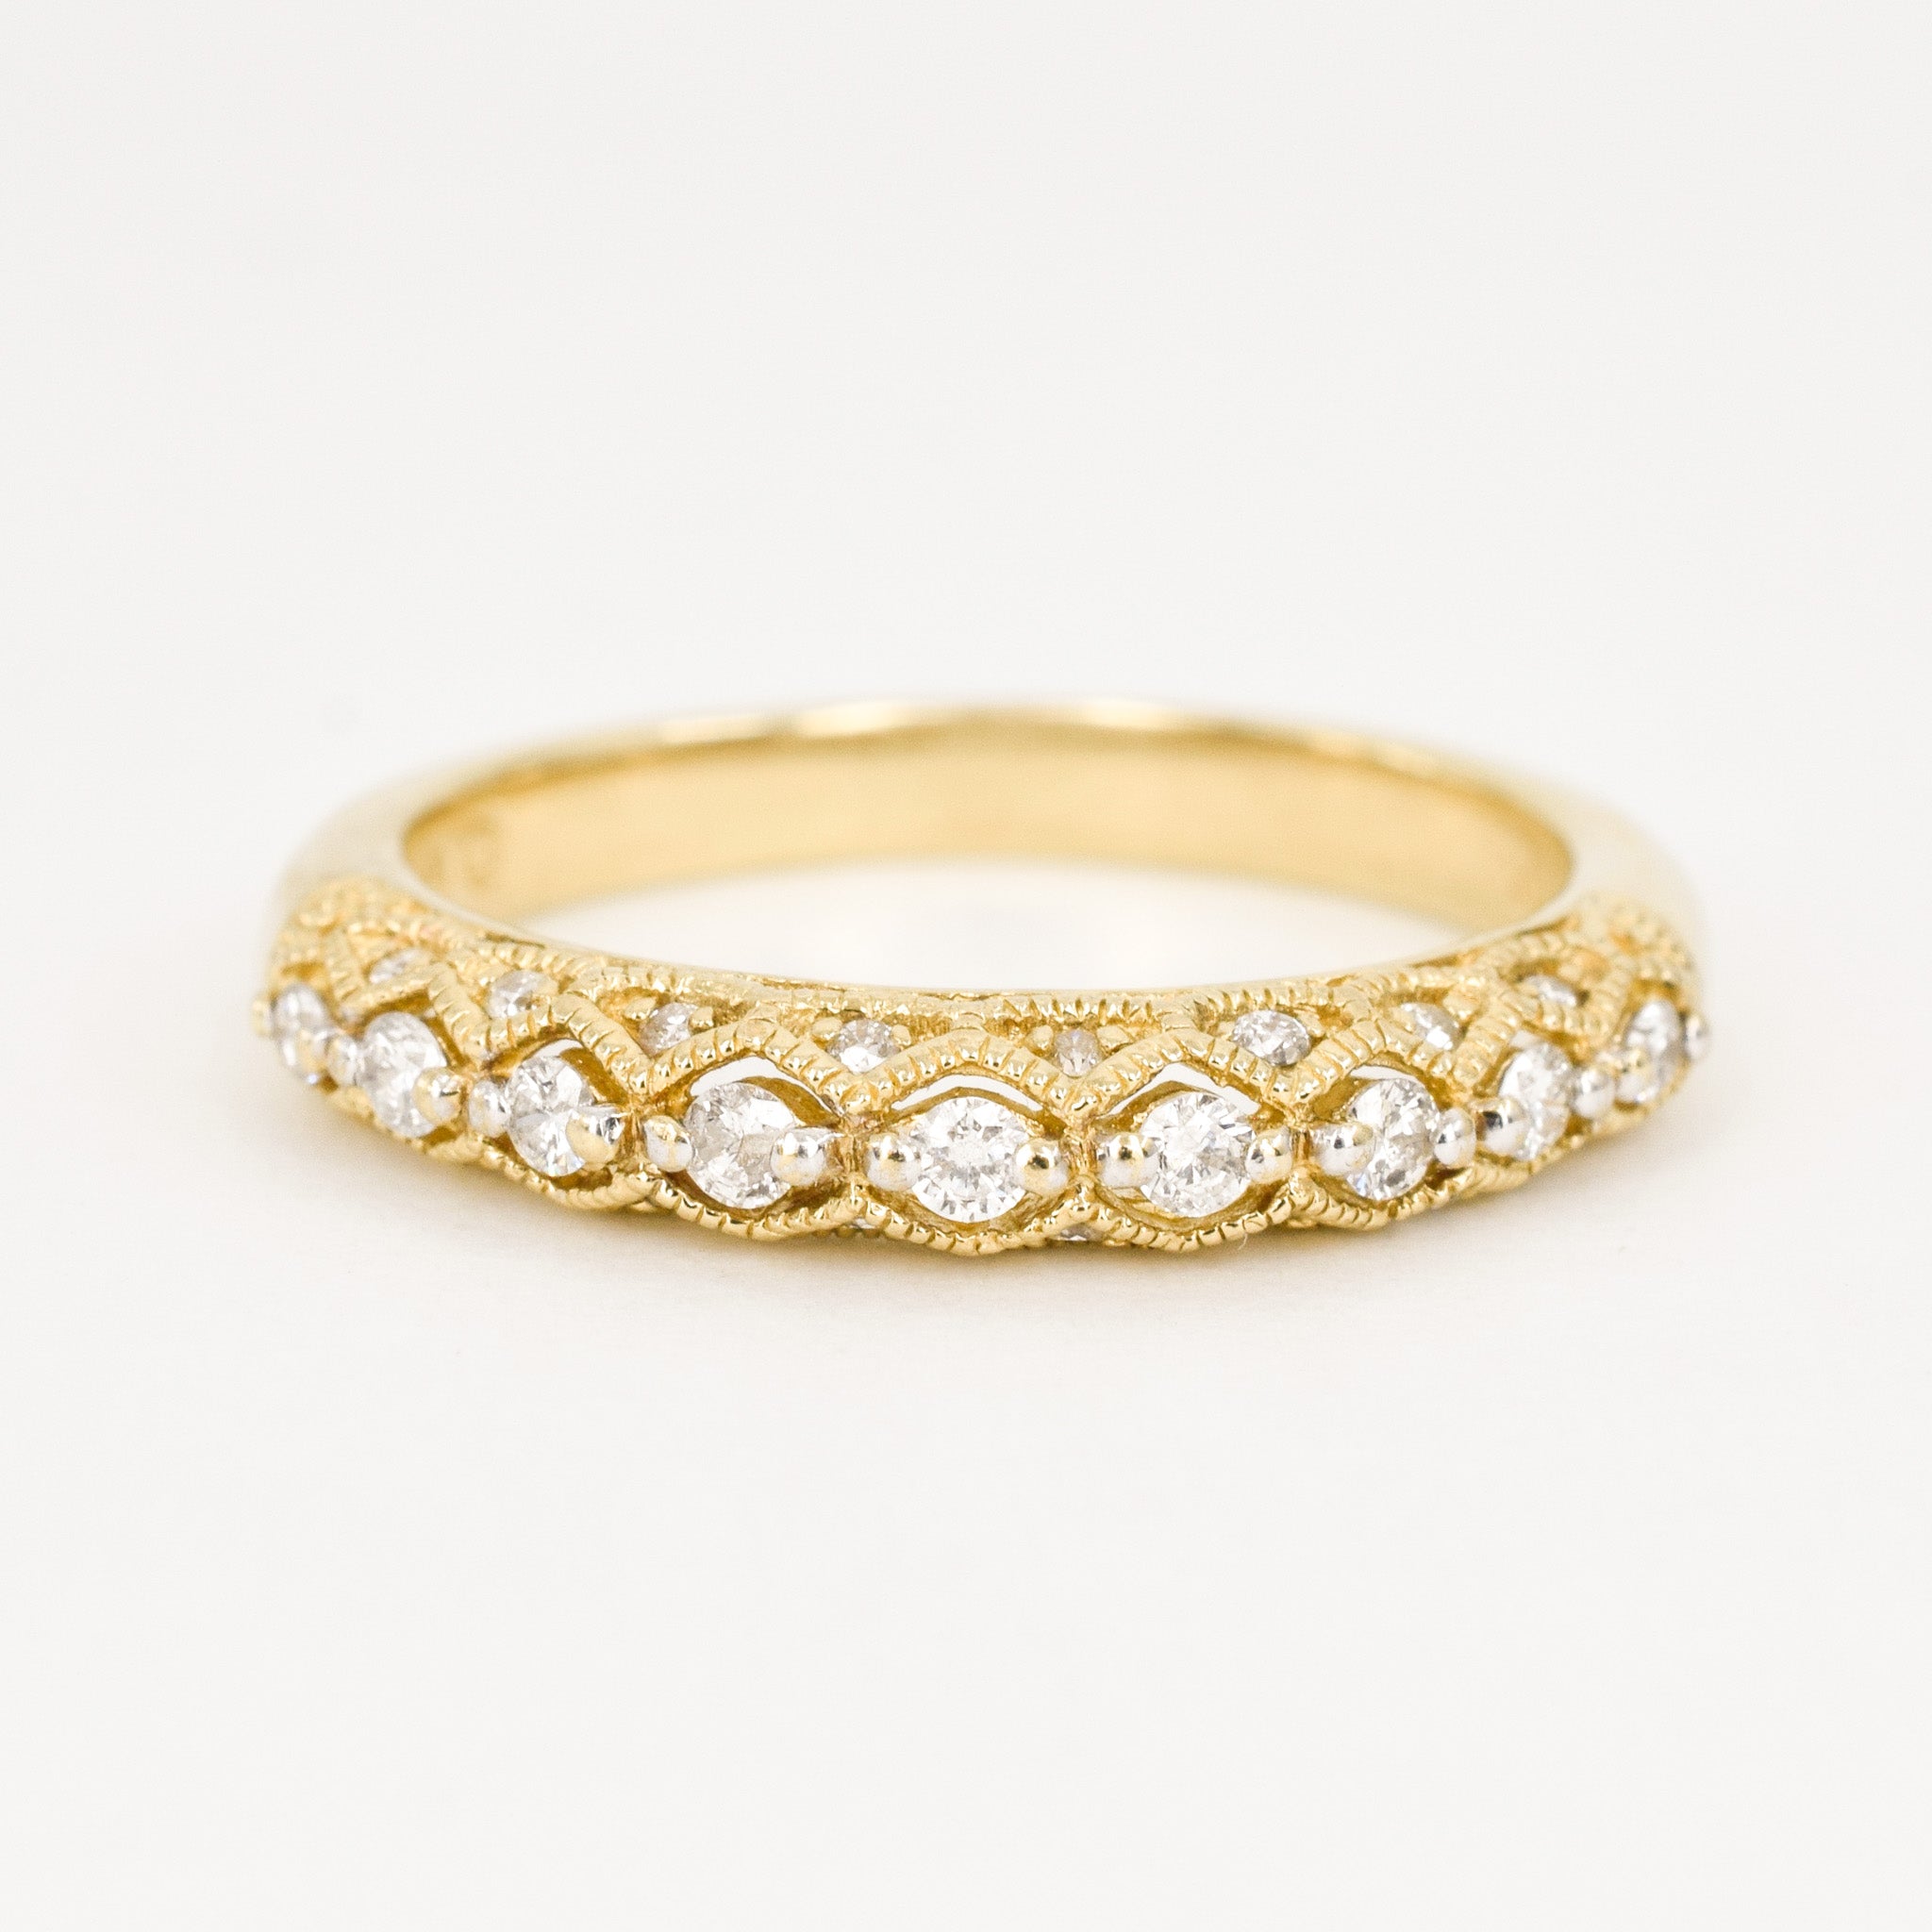 vintage gold domed diamond wedding band, folklor vintage jewelry canada